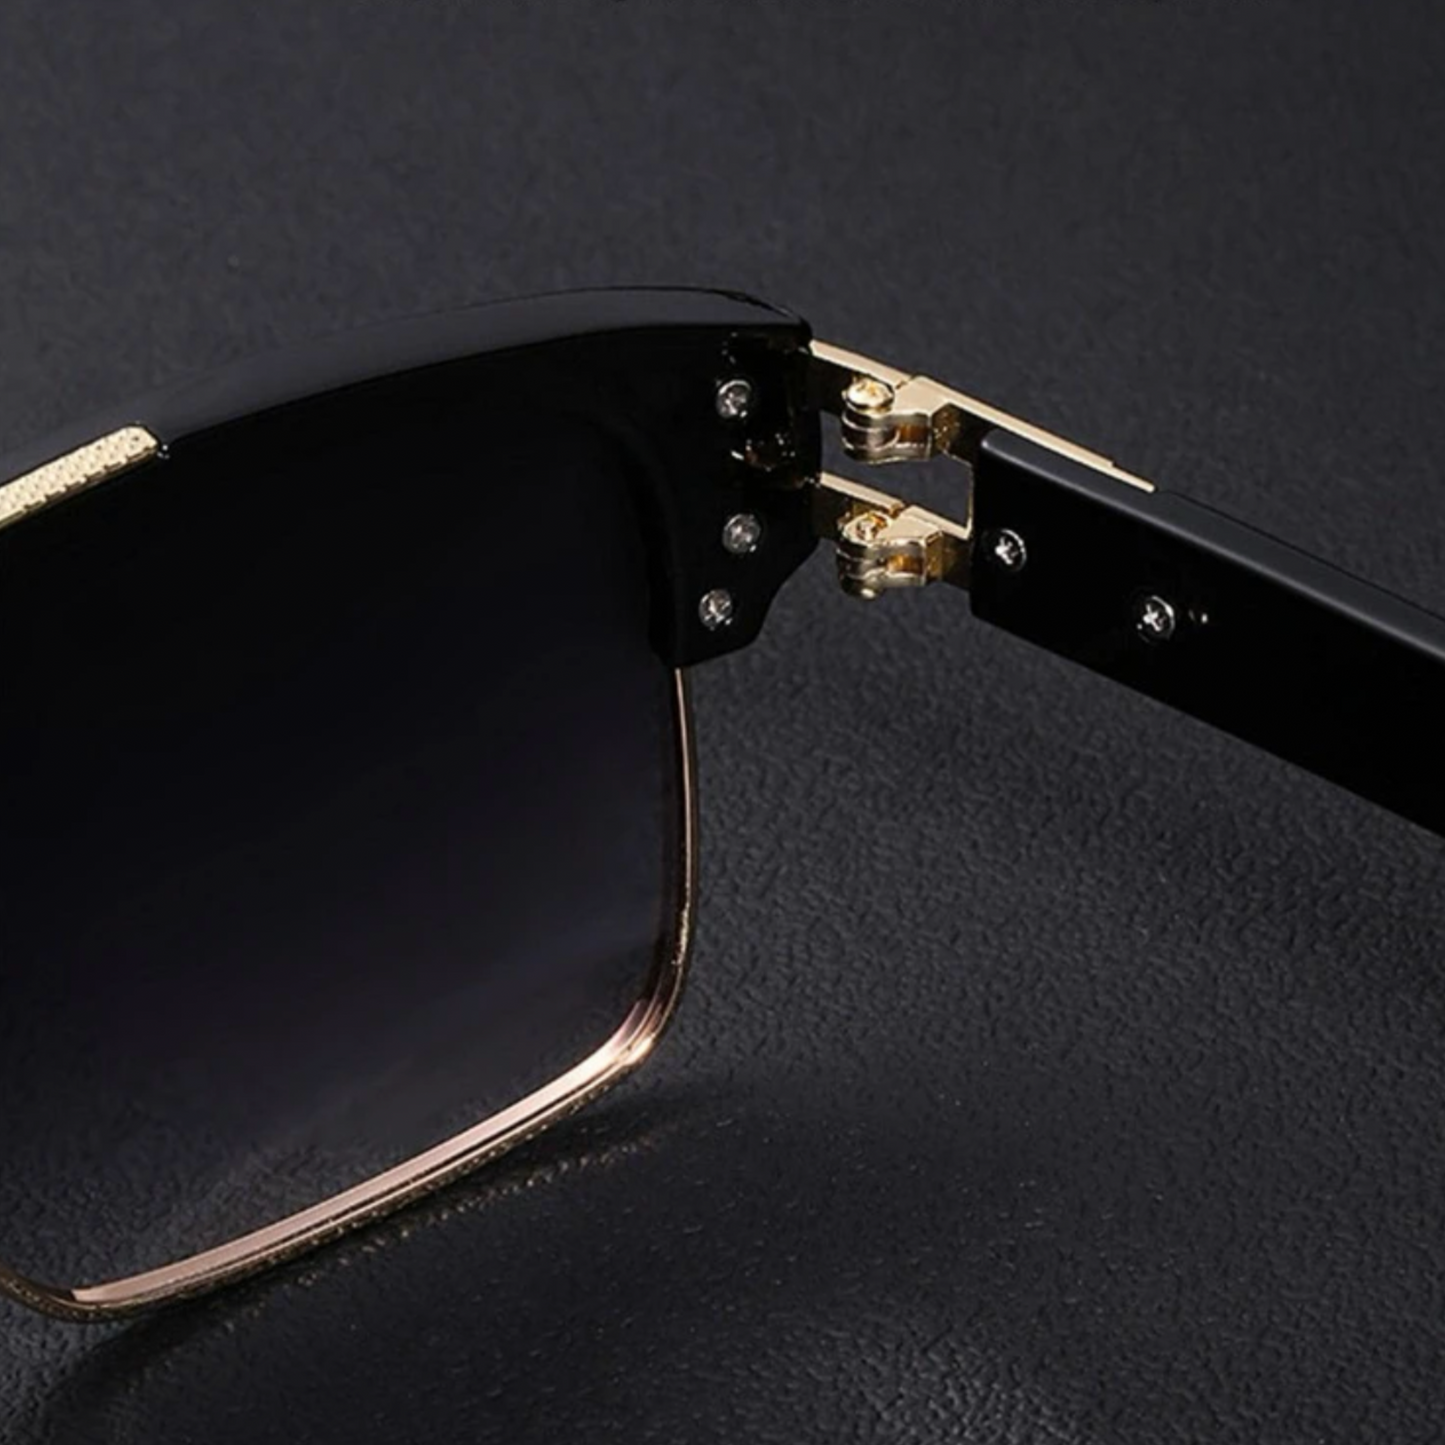 Black Frame Tinted Top Bar Fashion Glasses Style B